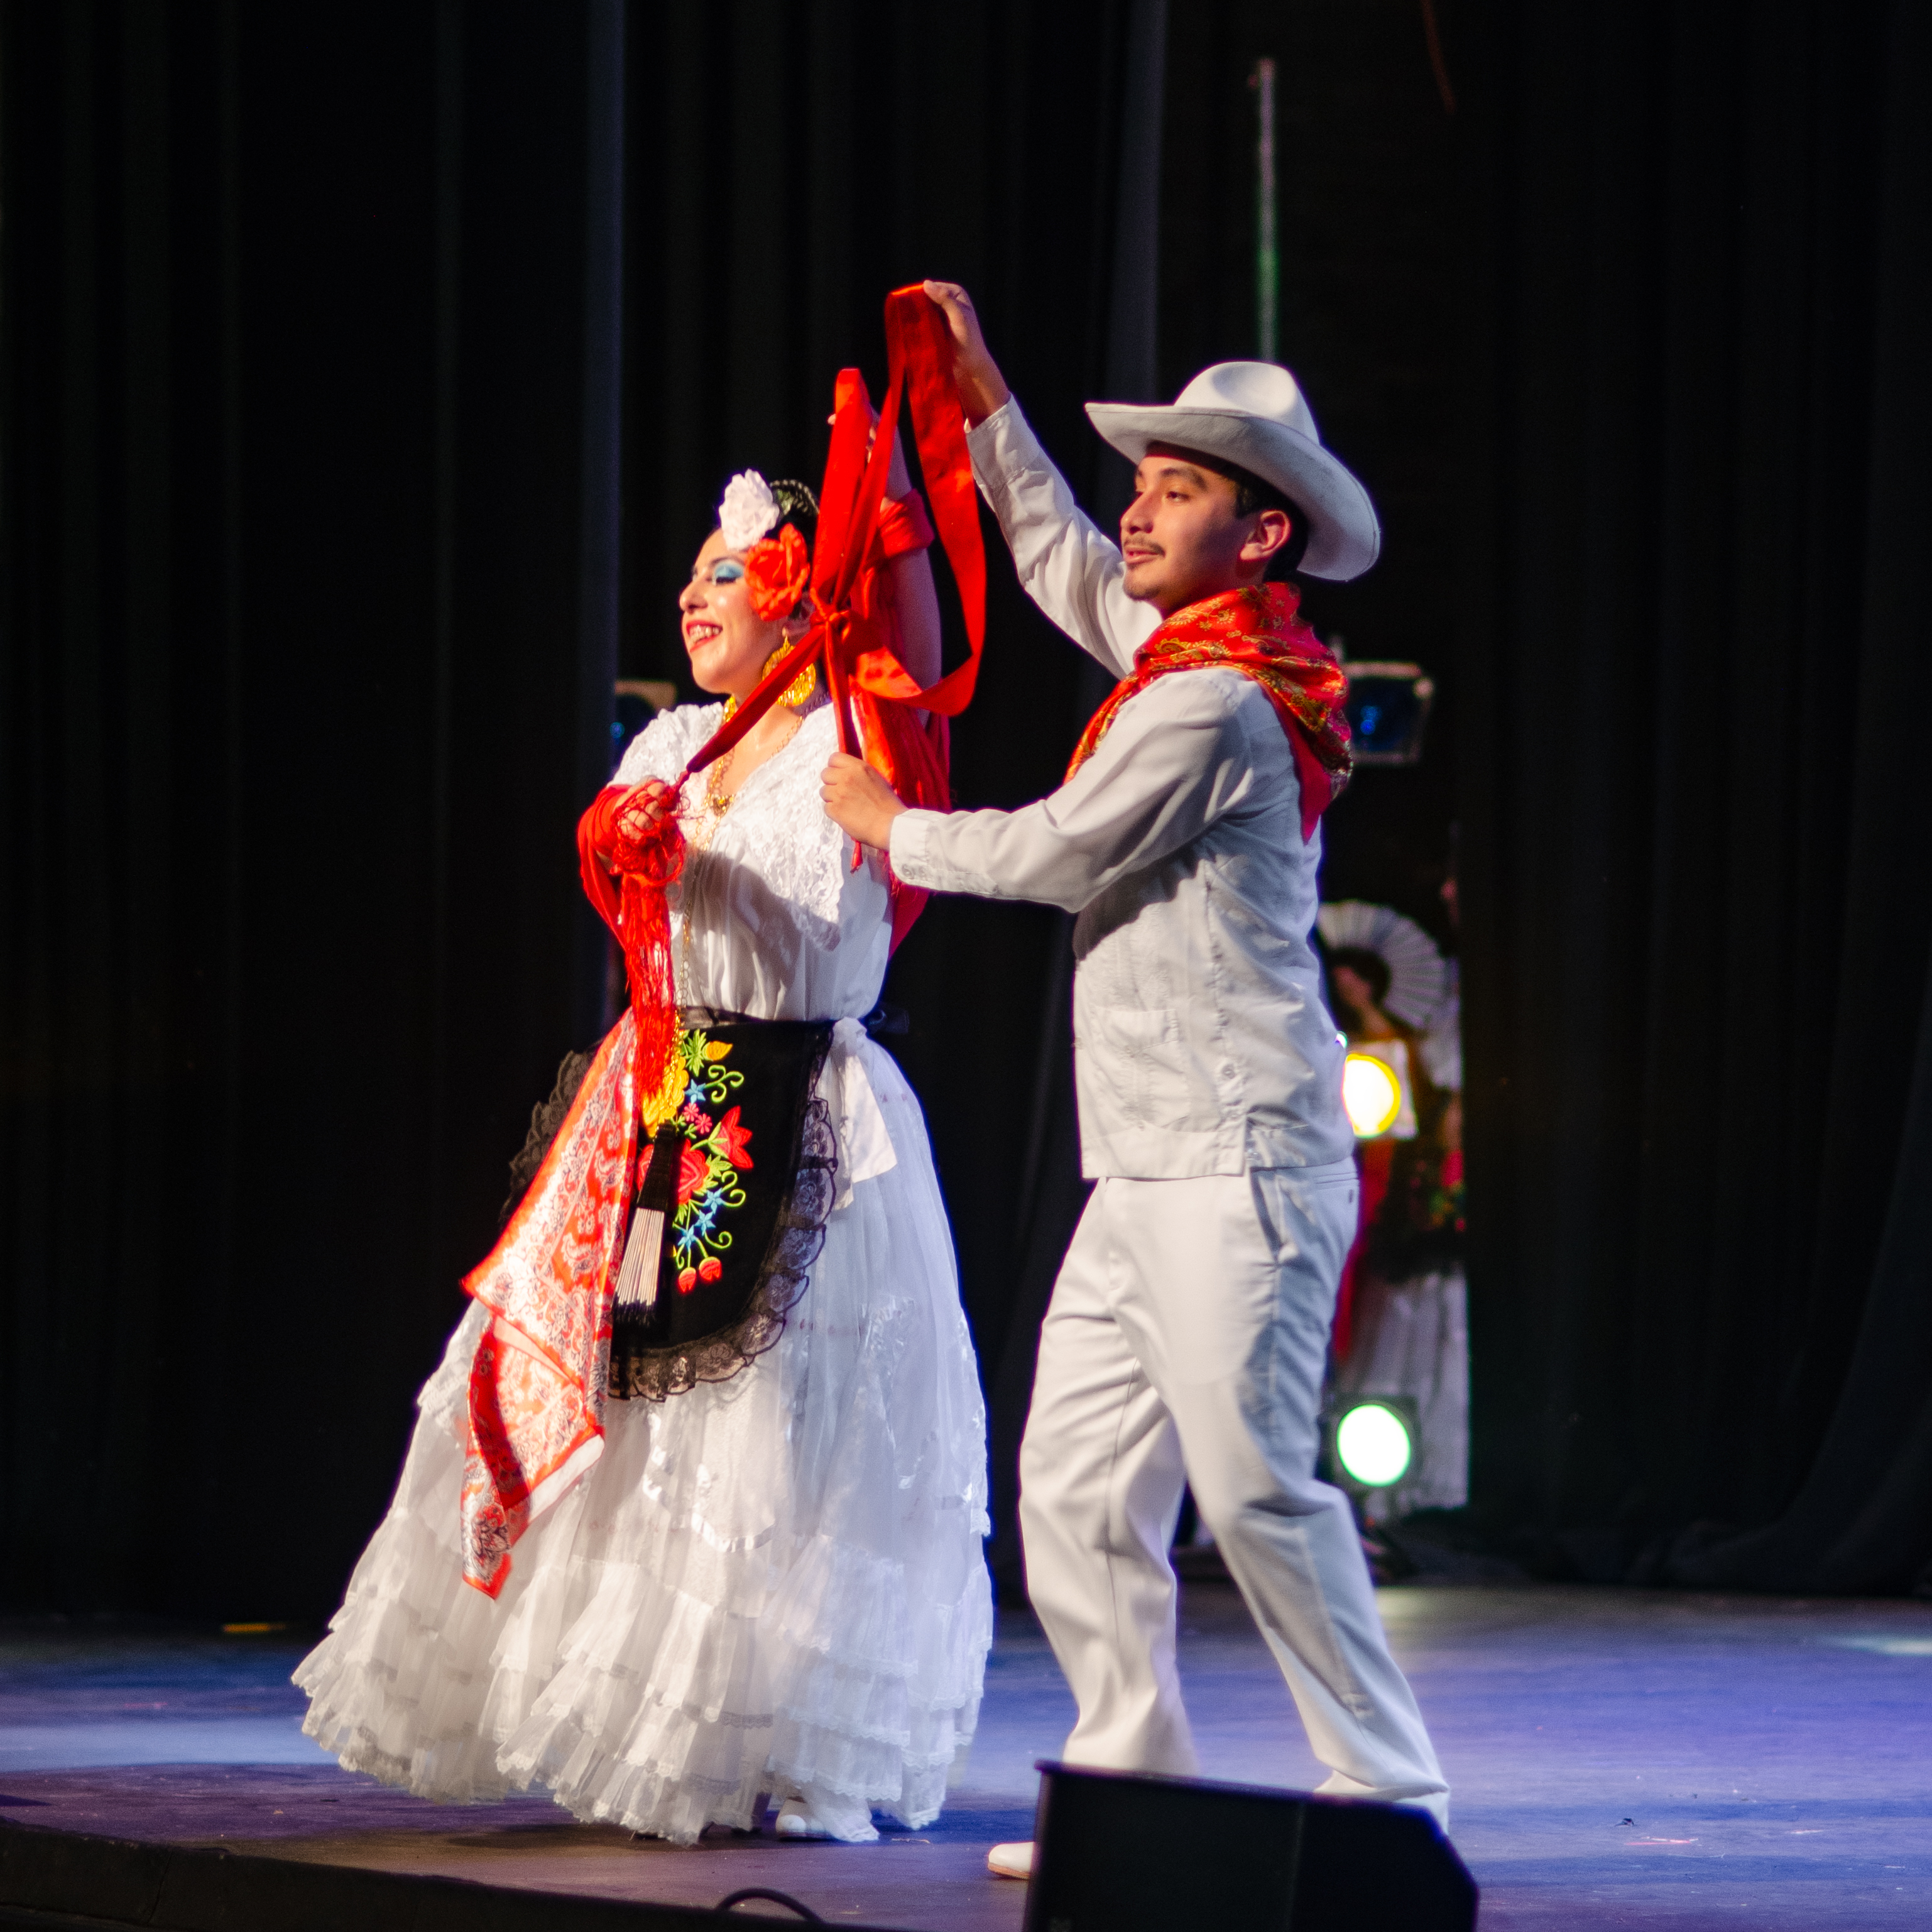 The Mexican Dance Company dancing La Bamba